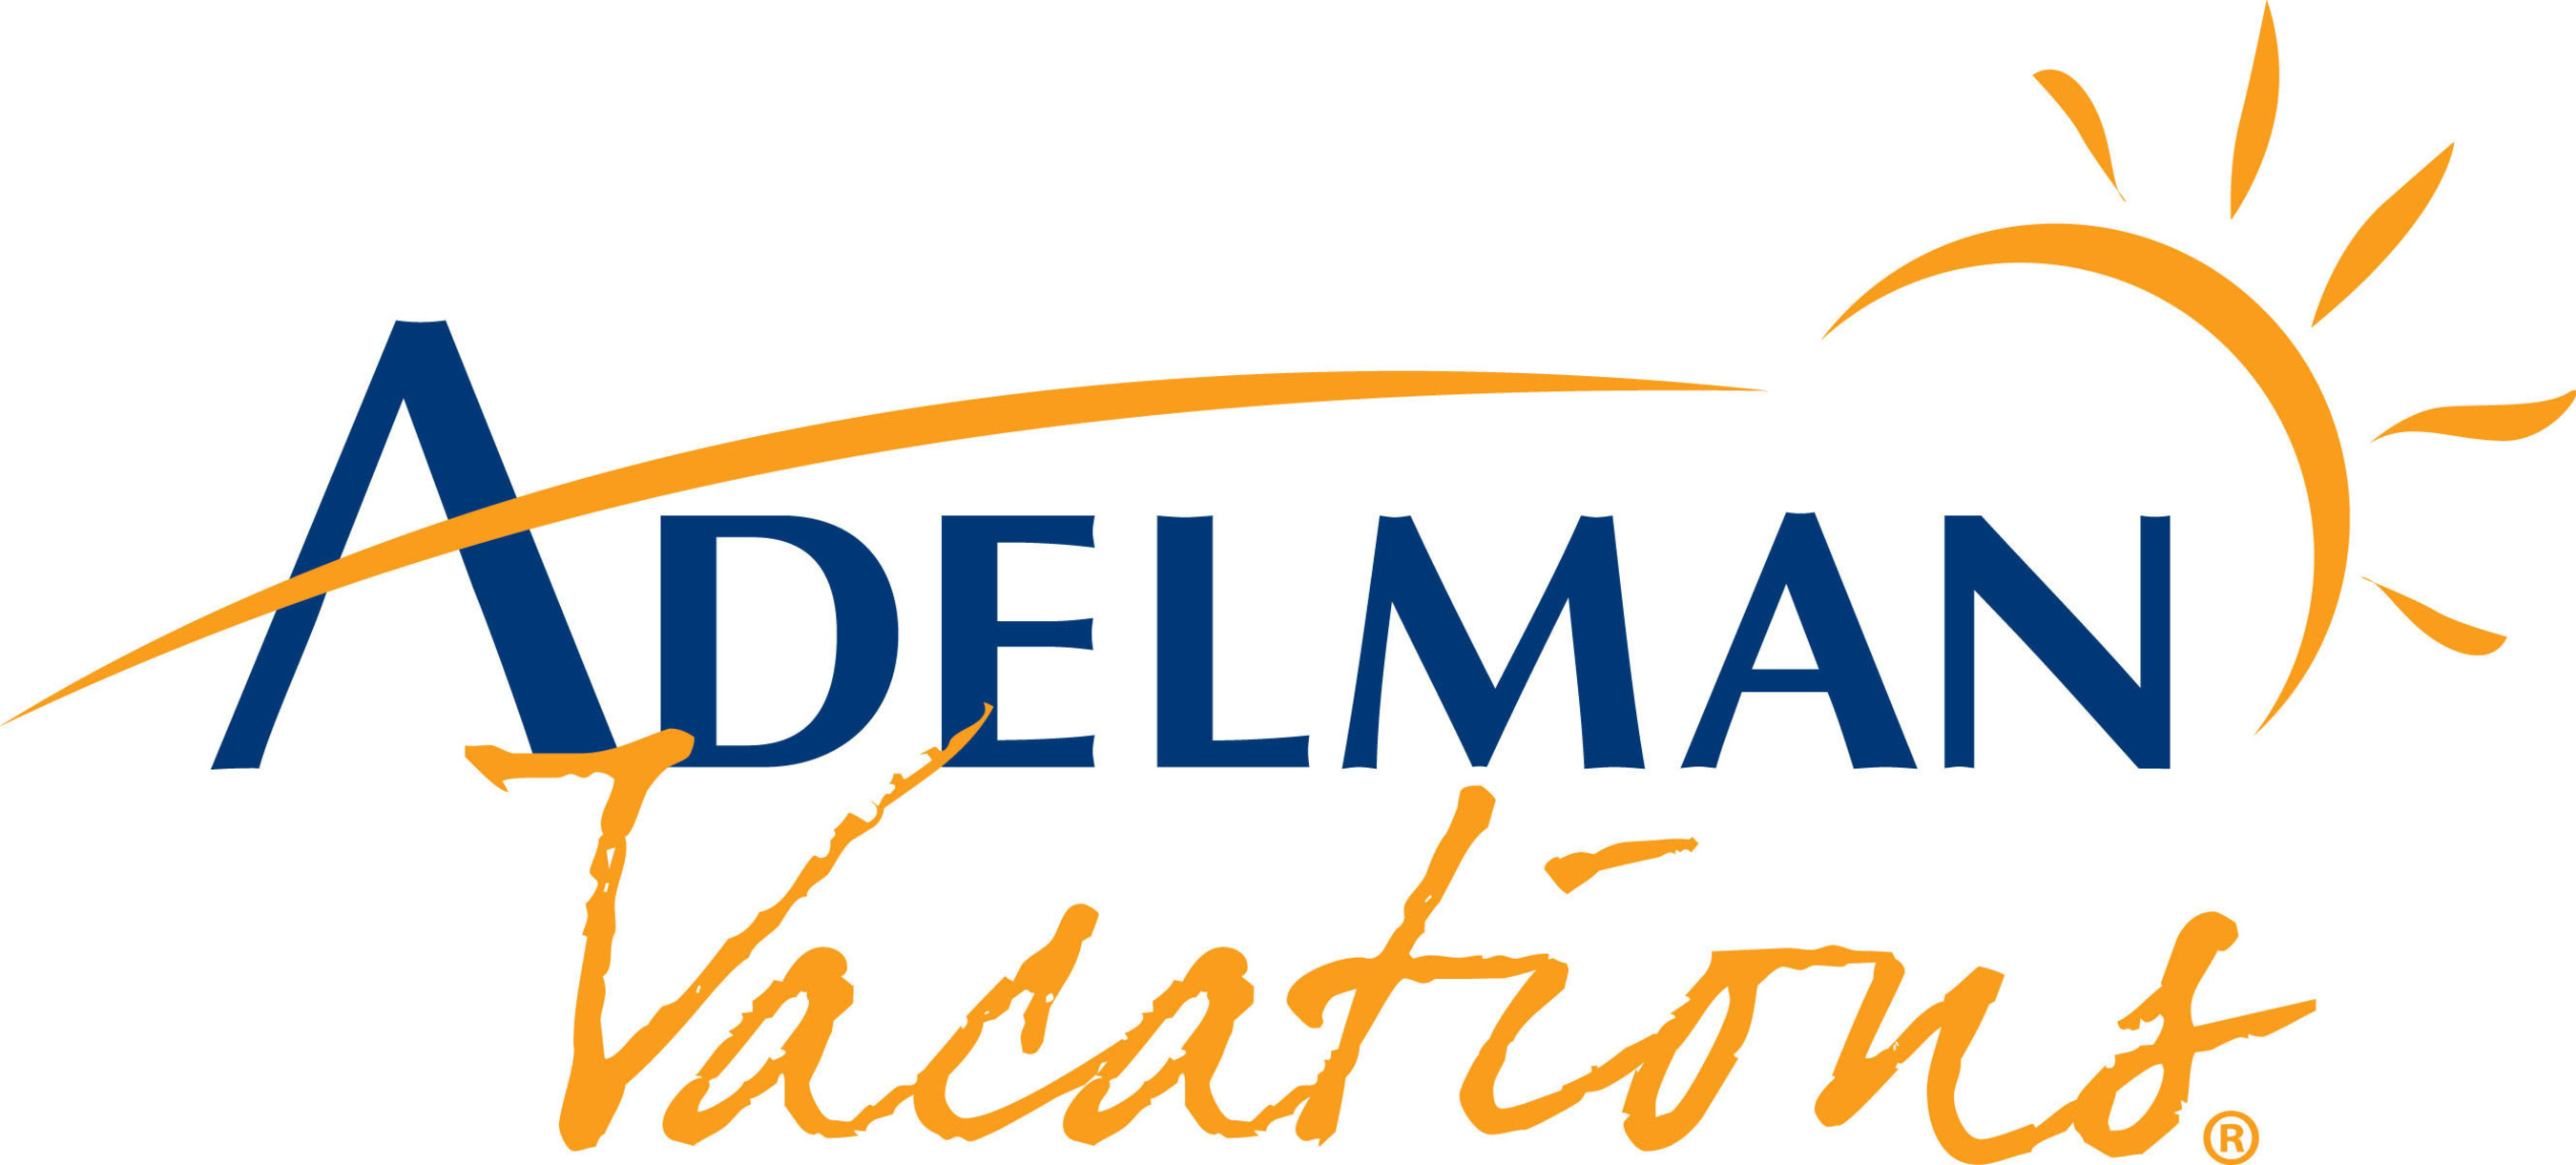 Adelman Vacations logo.